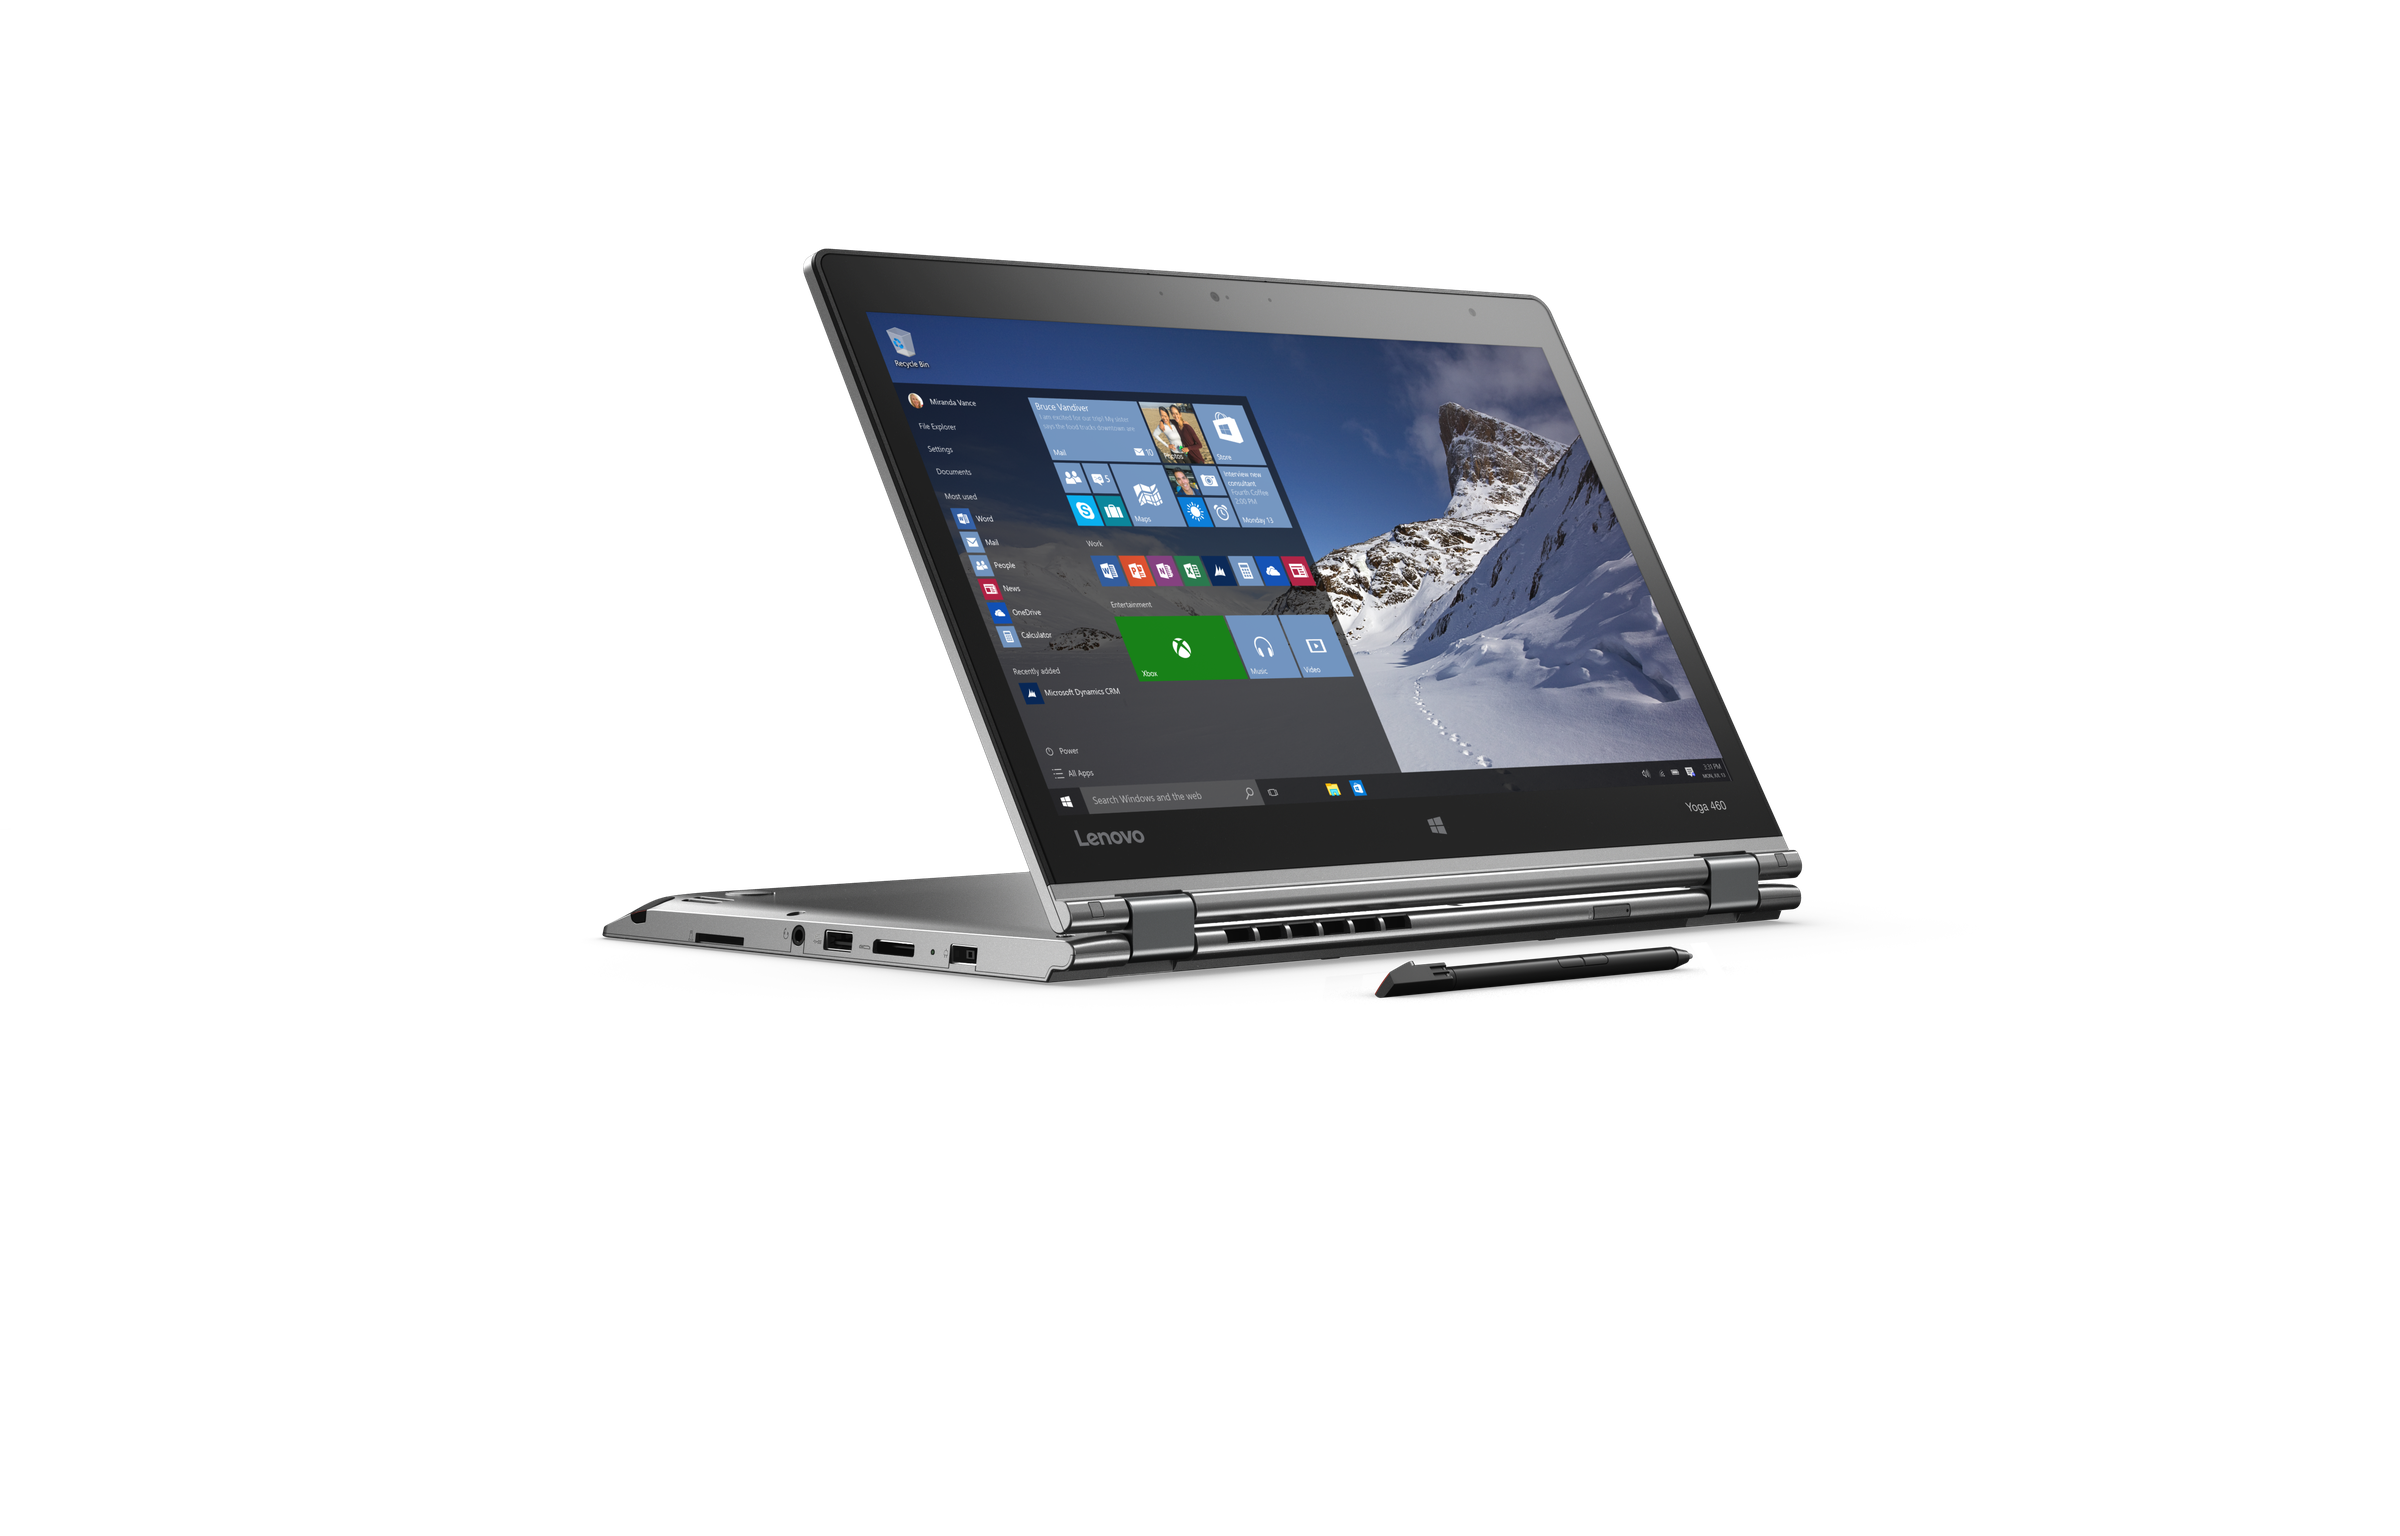 Lenovo ThinkPad Yoga 460 press photos